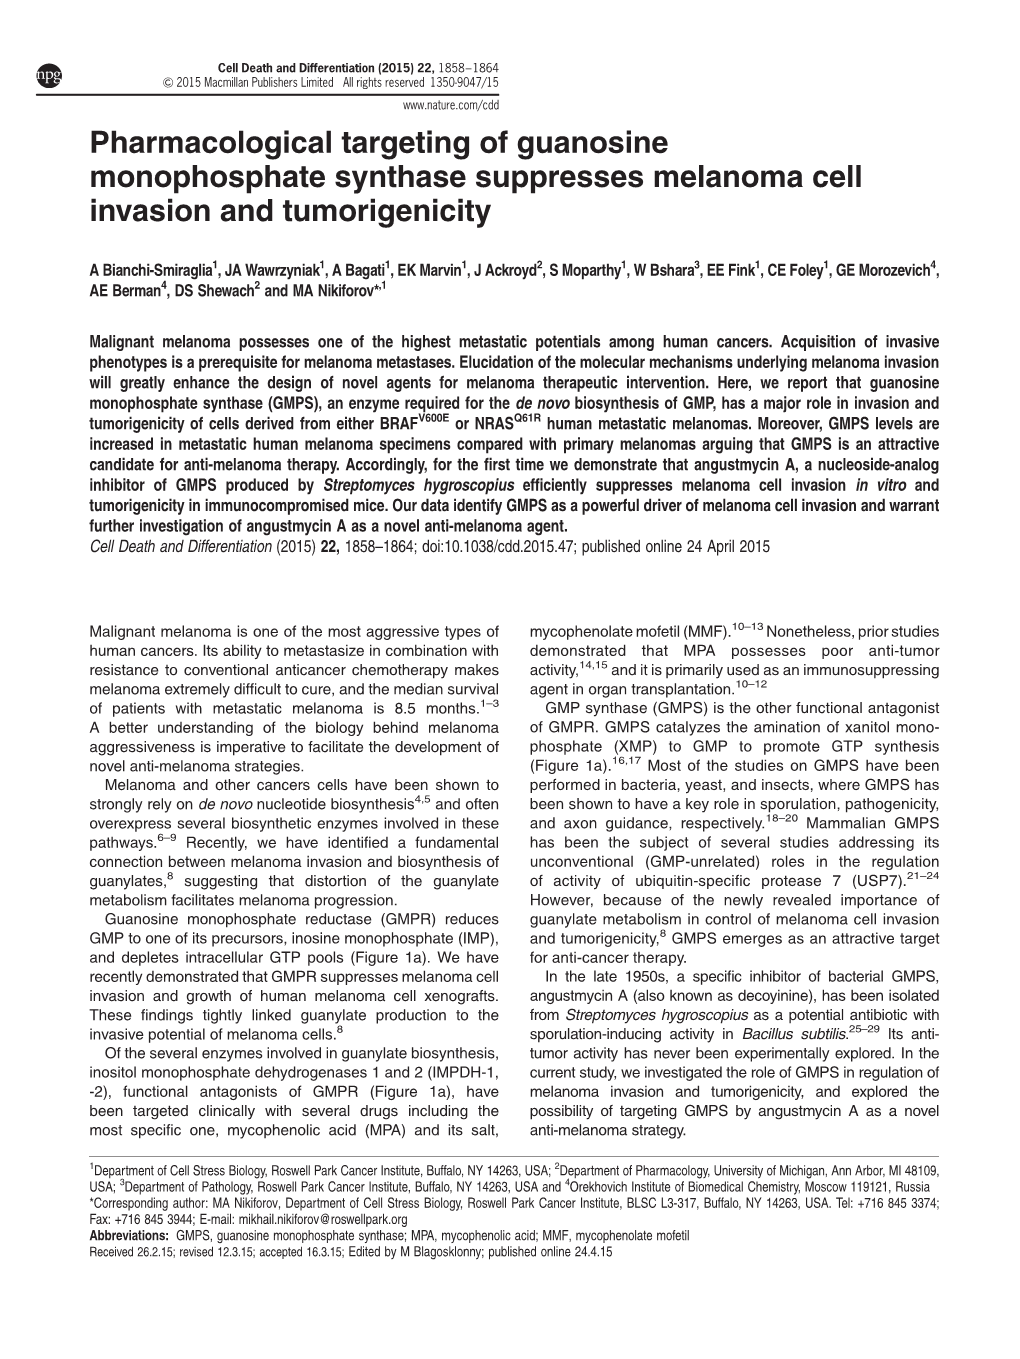 Pharmacological Targeting of Guanosine Monophosphate Synthase Suppresses Melanoma Cell Invasion and Tumorigenicity